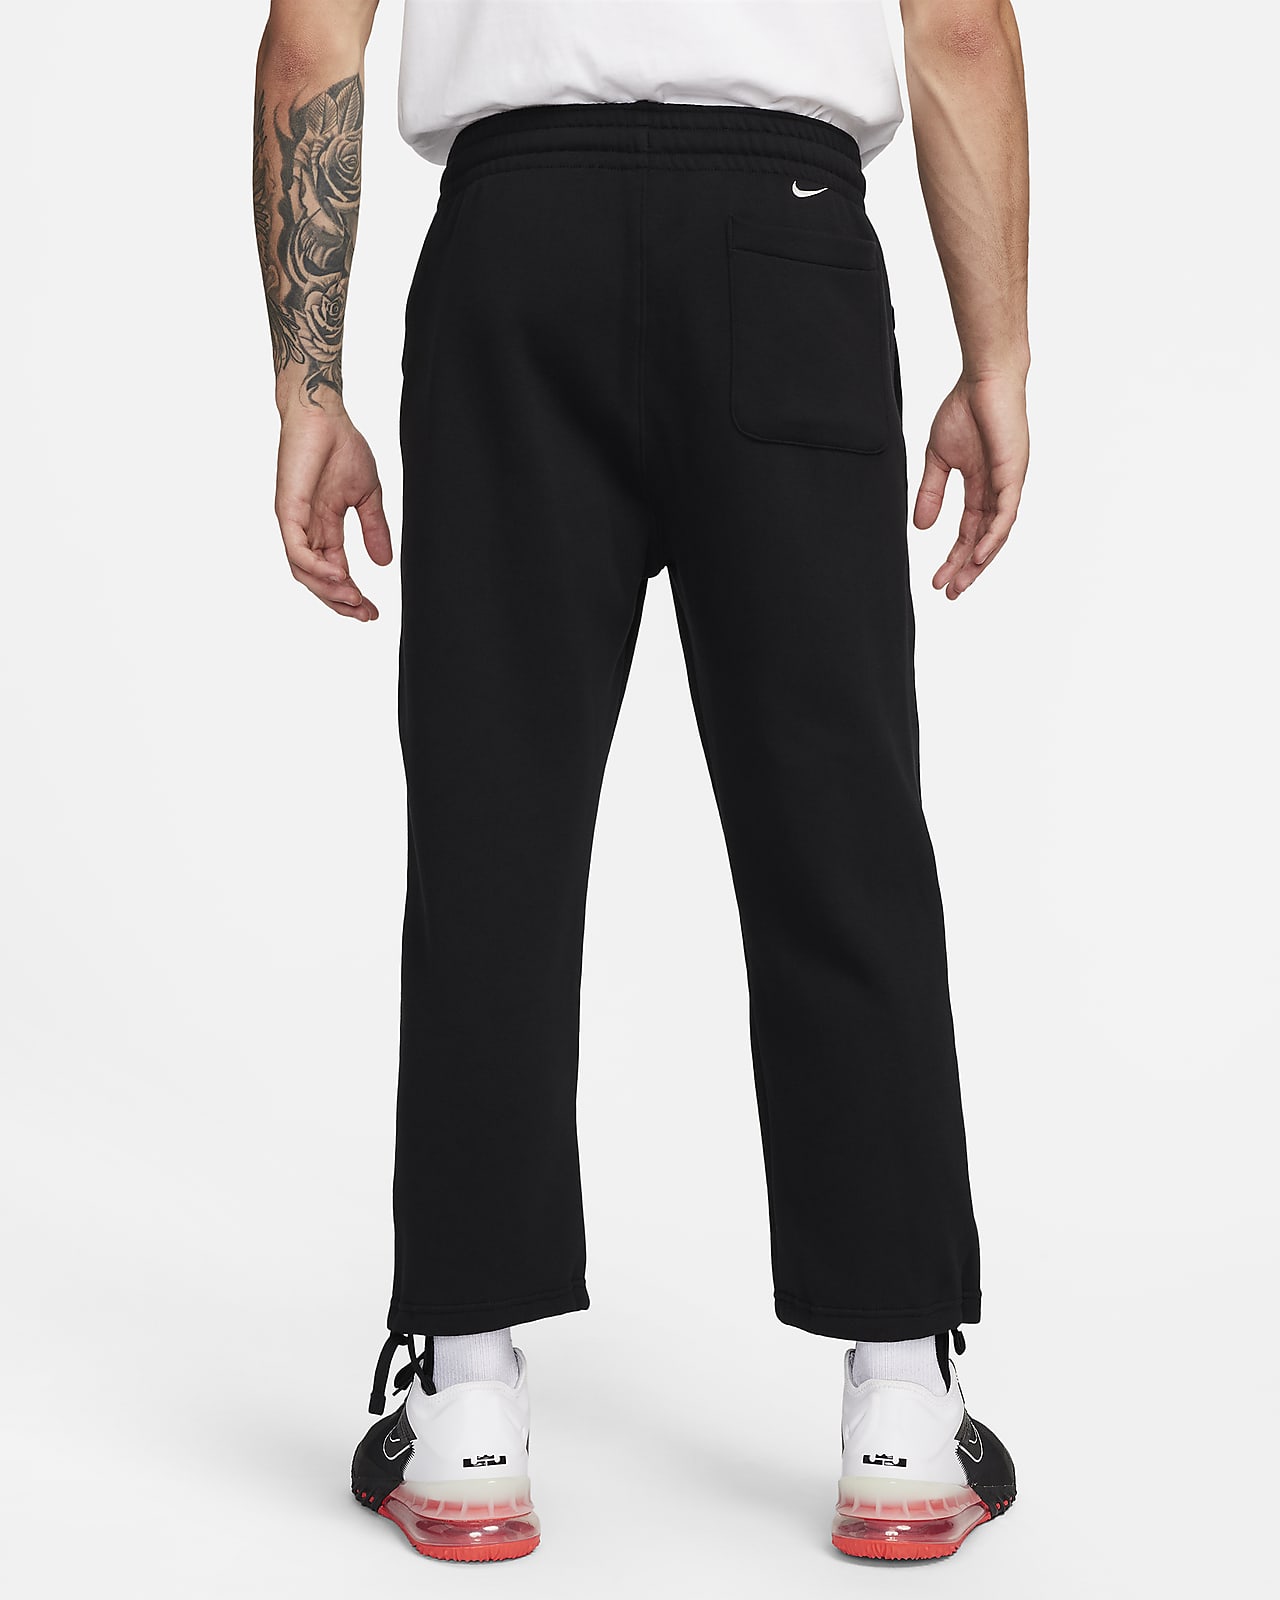 Pants de tejido Fleece con dobladillo abierto para hombre LeBron. Nike MX